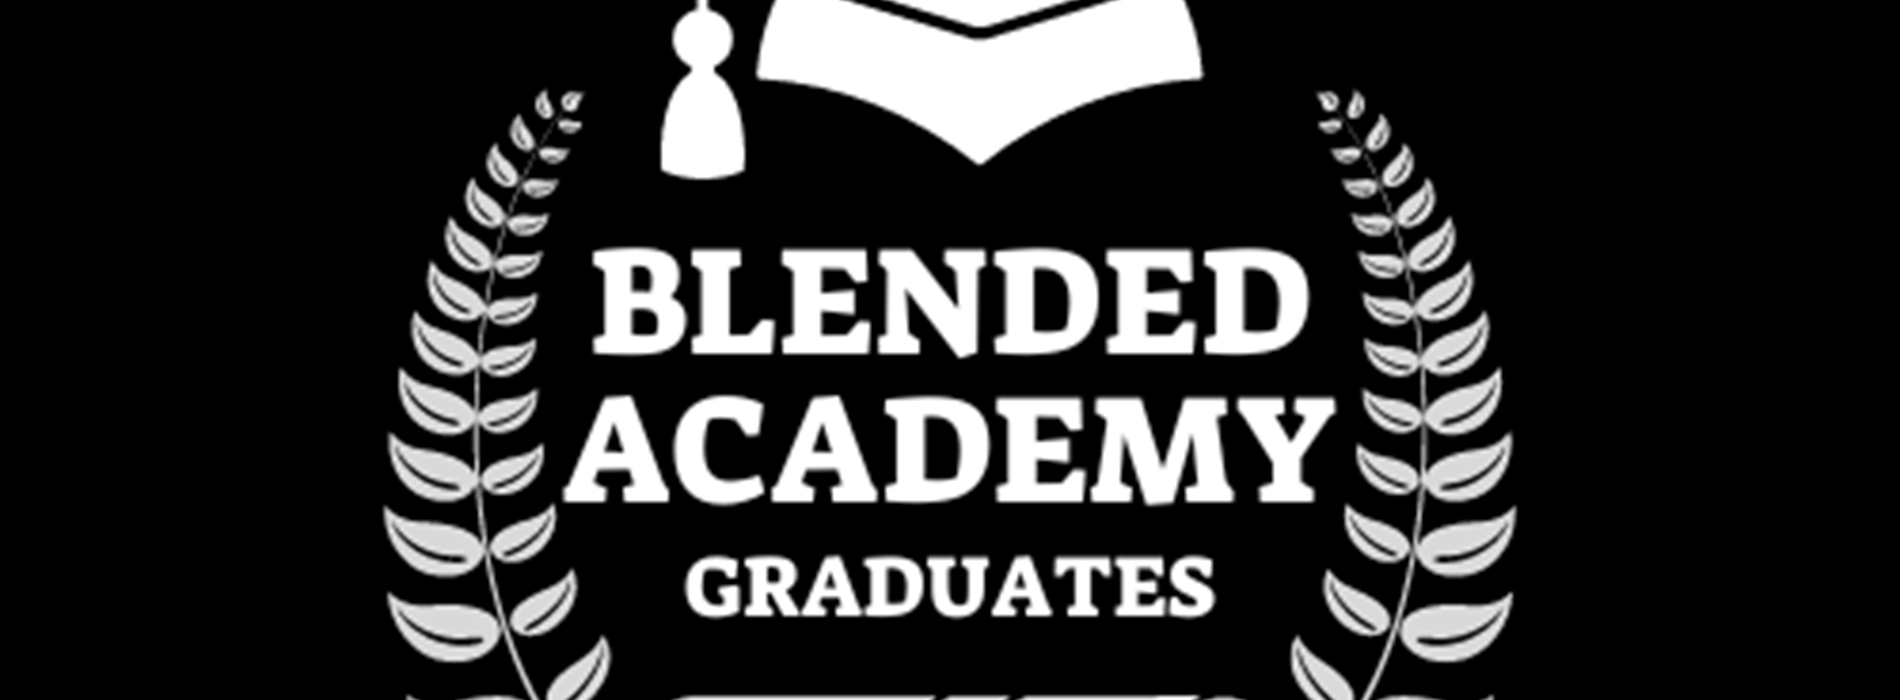 Blended Academy Graduates